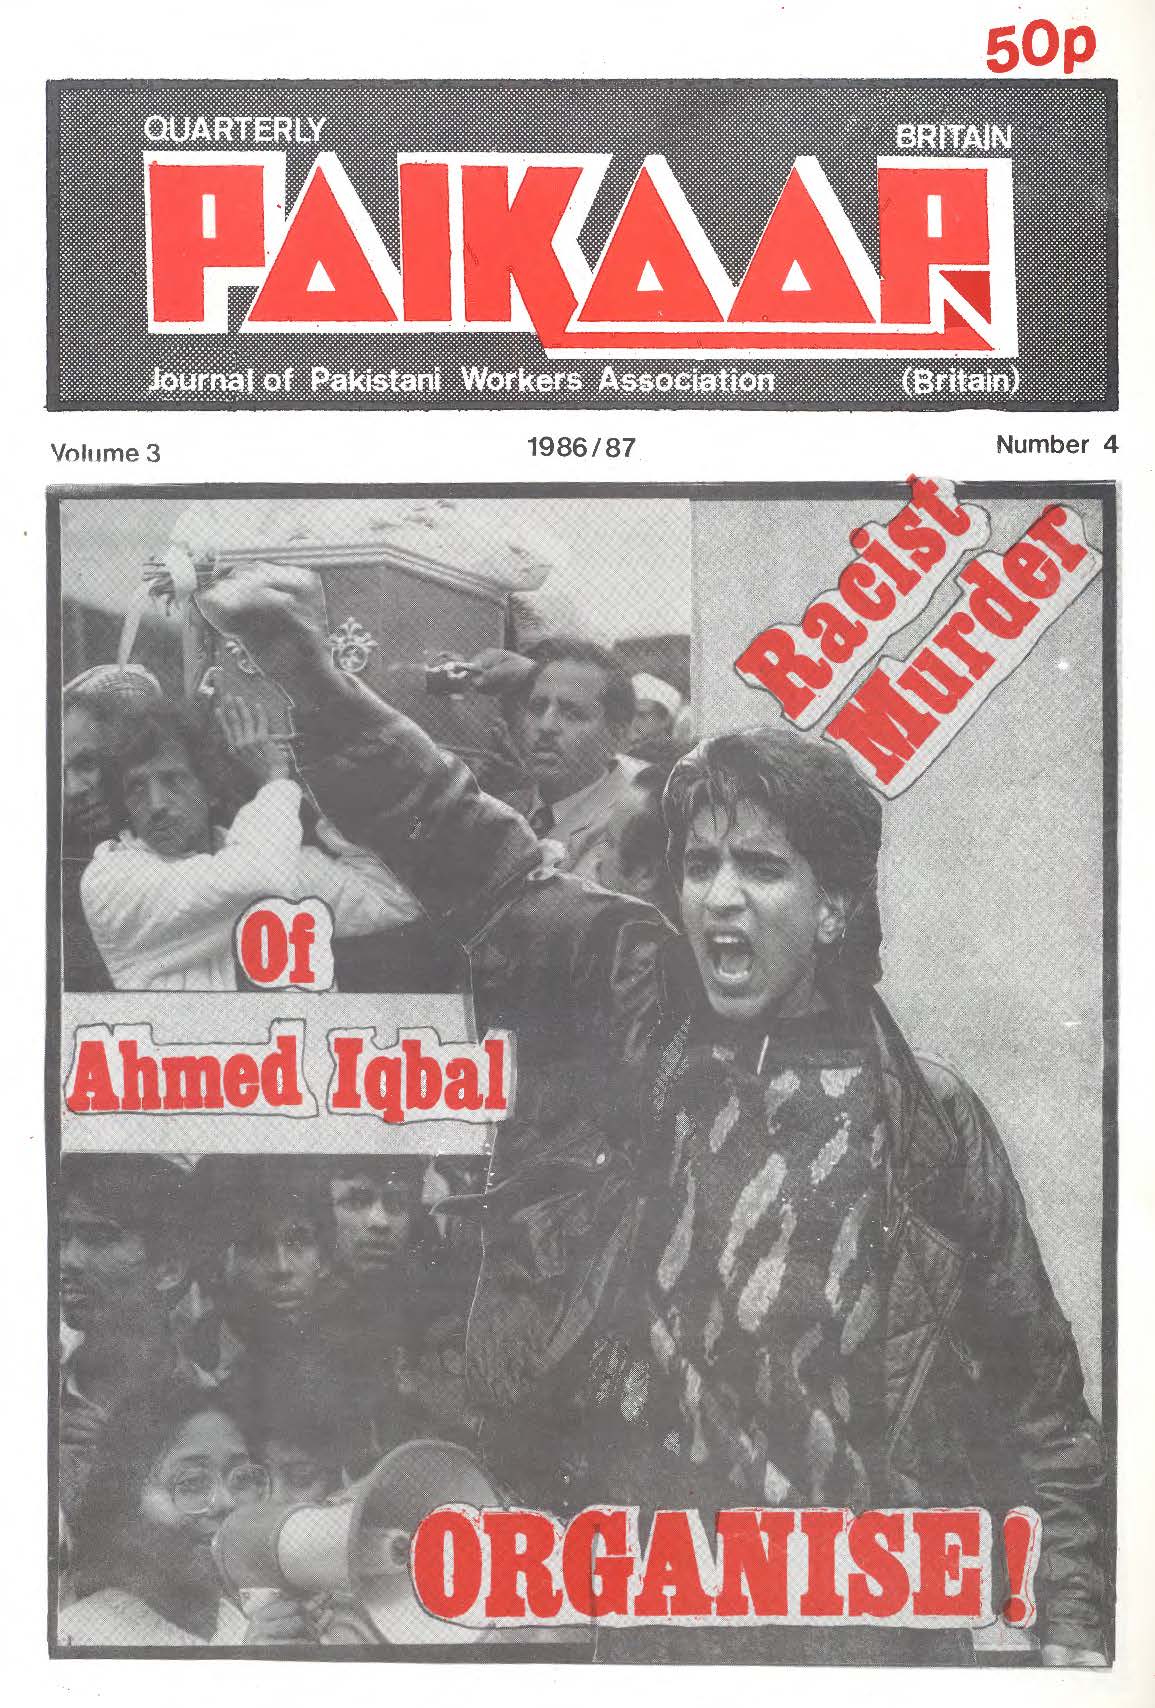 Paikar 1986 cover